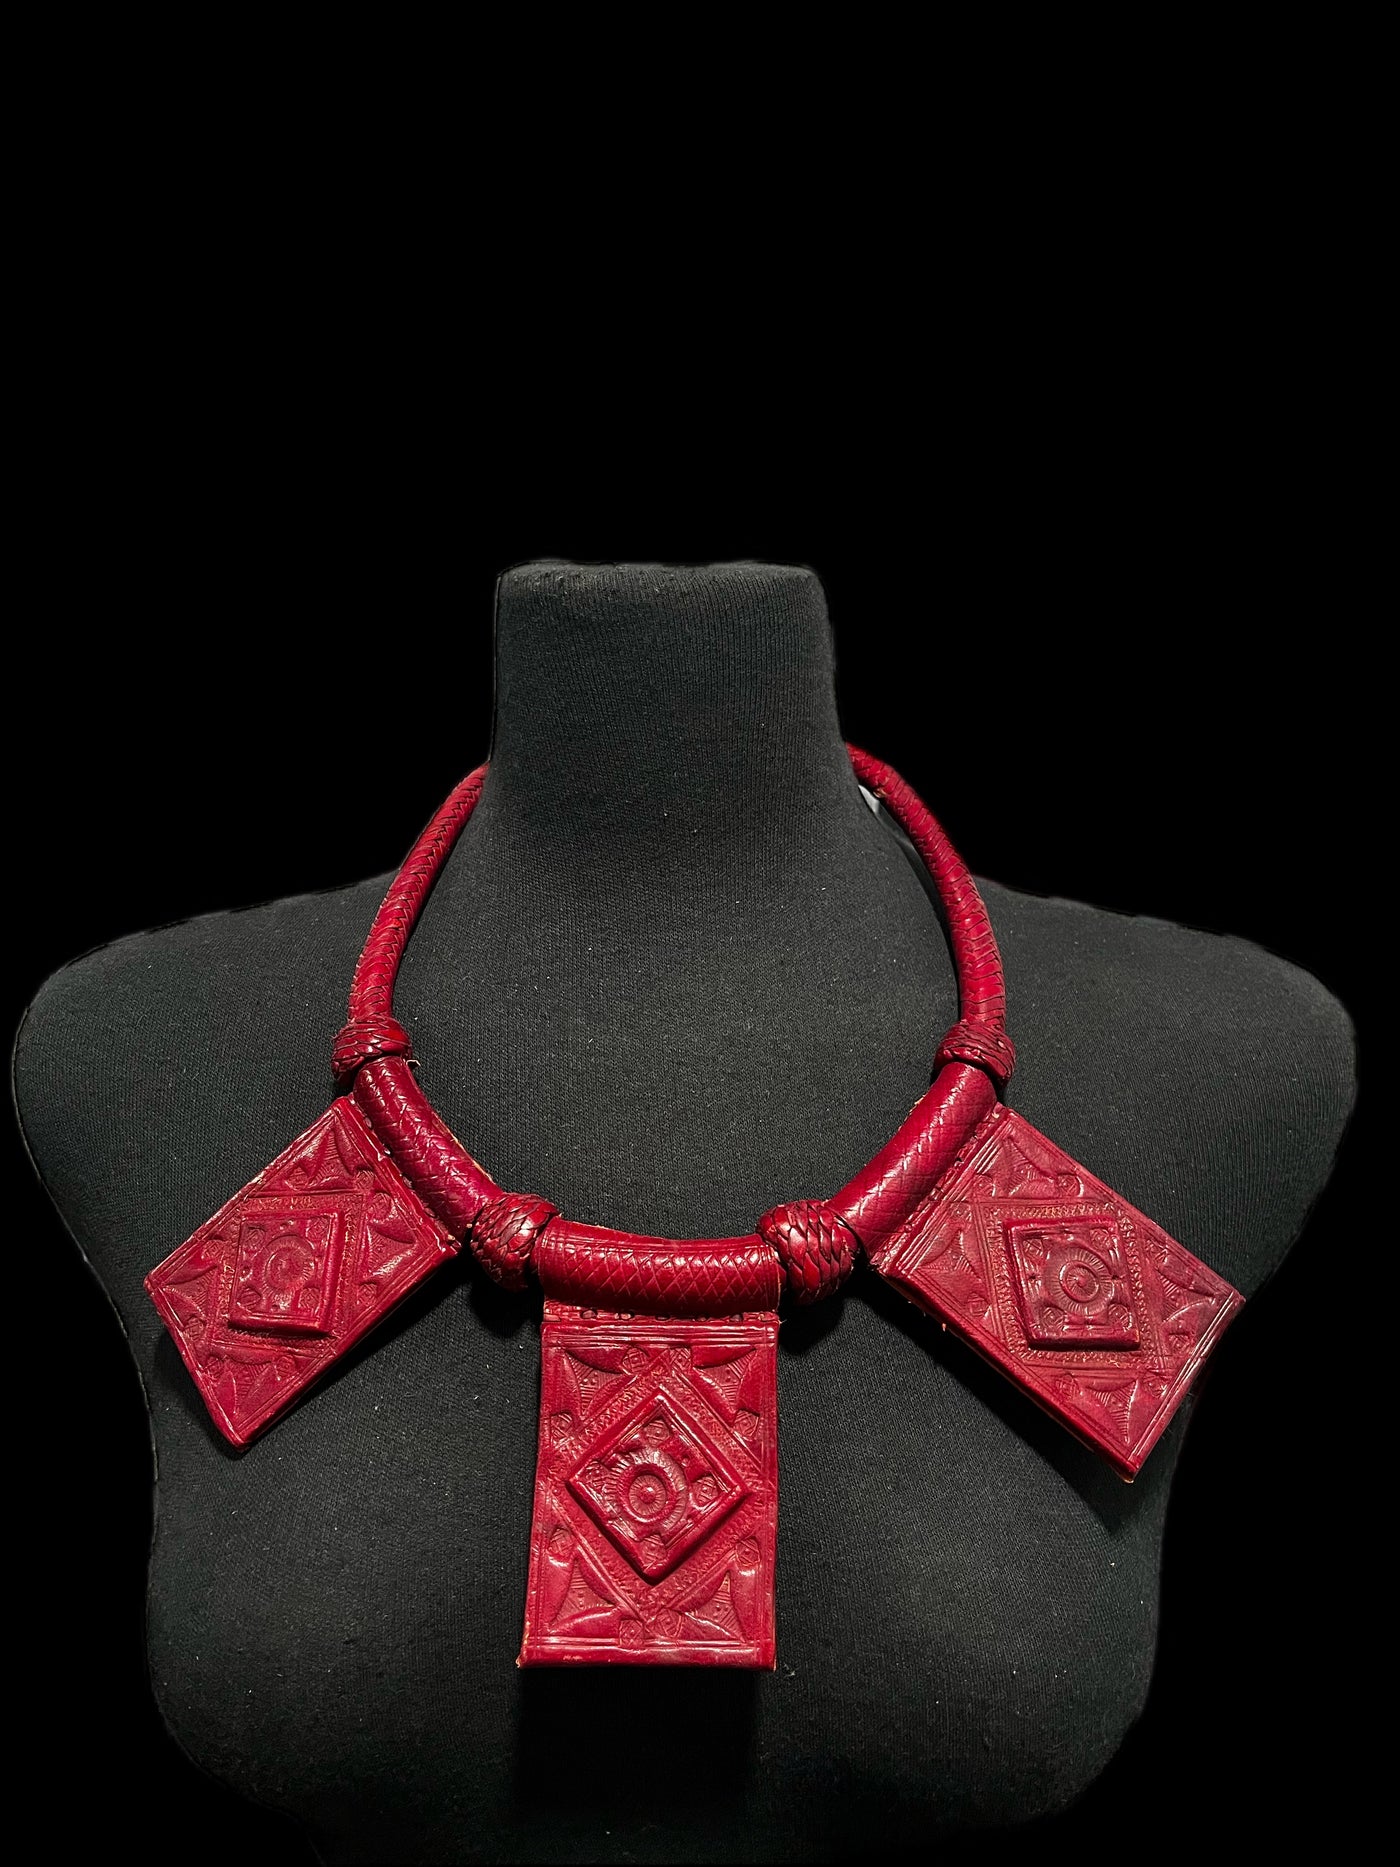 Barima leather Necklace